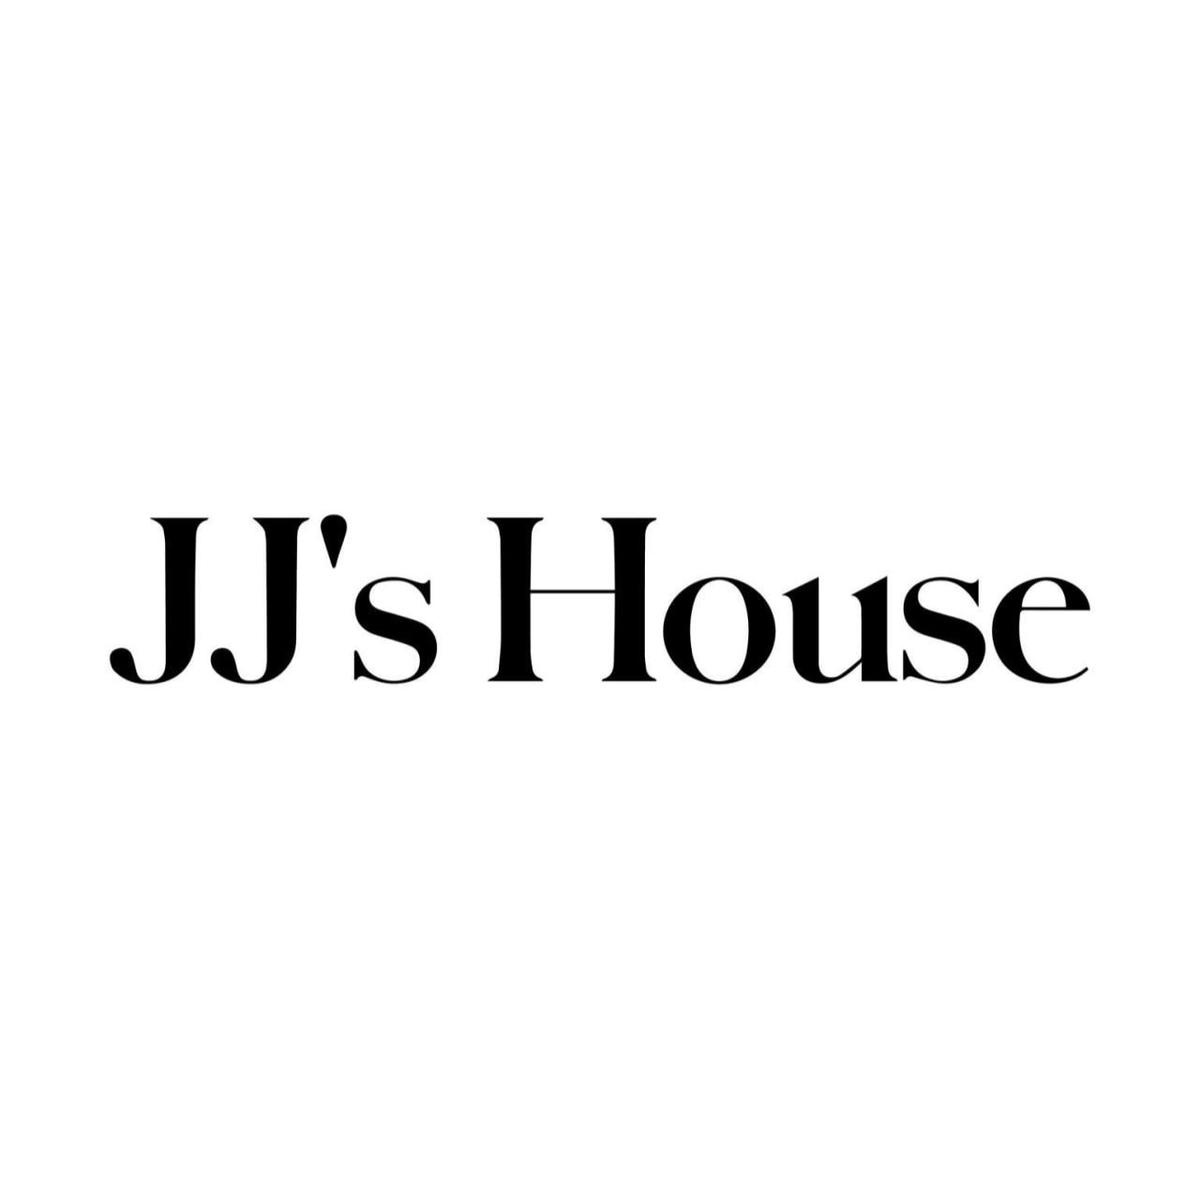 JJ's House's images